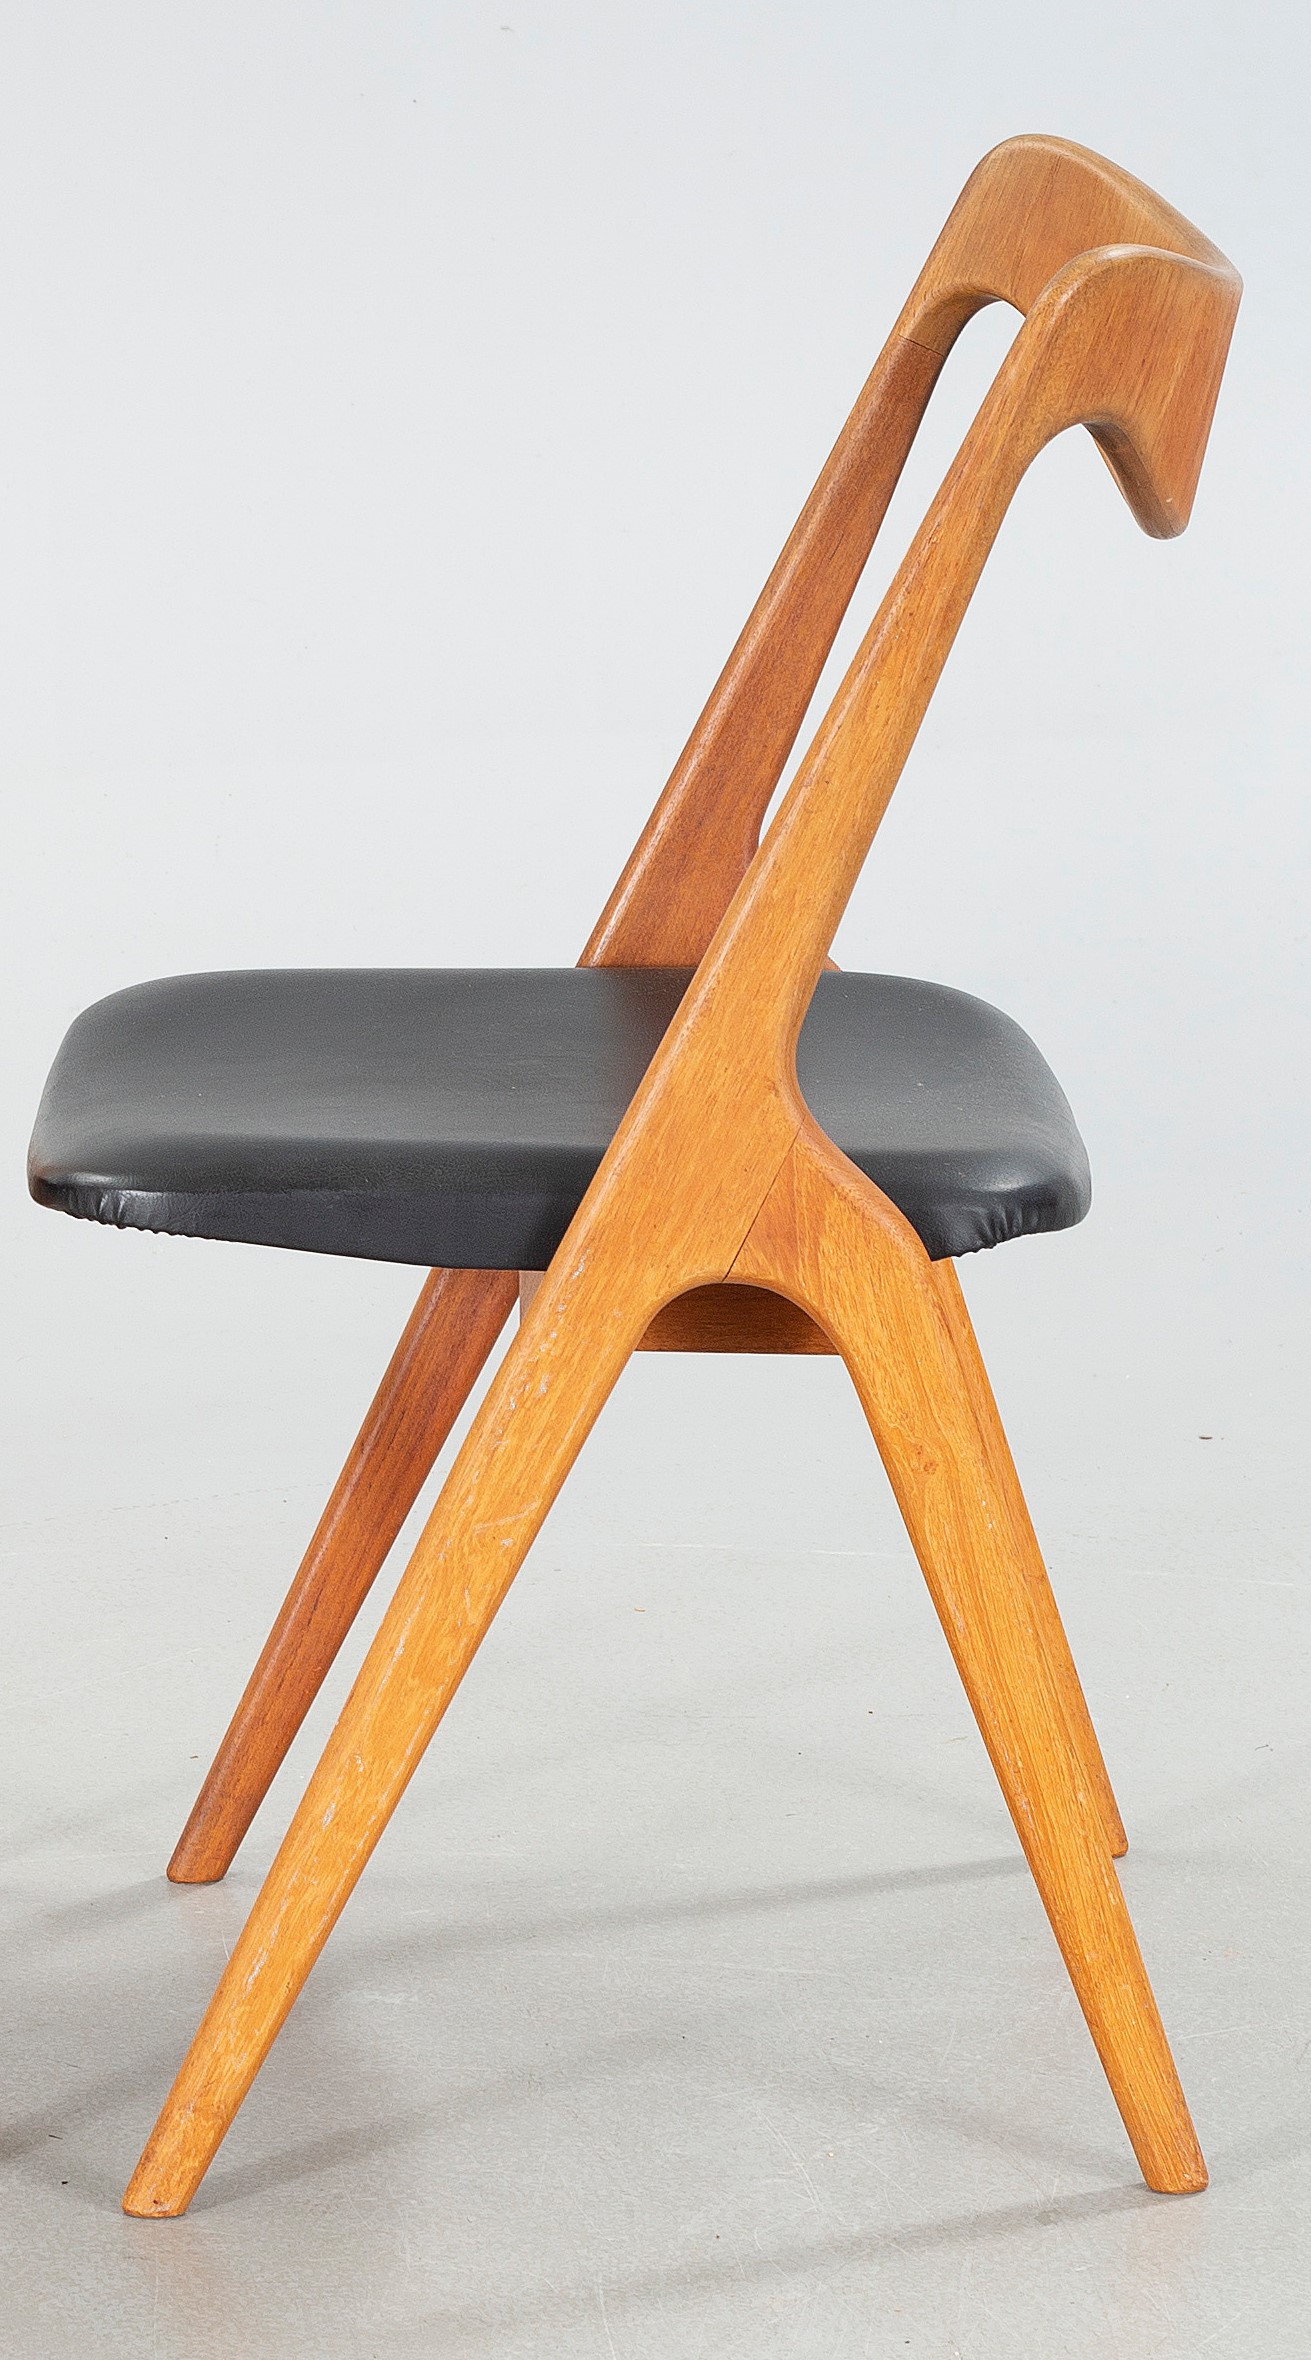 1636141972-albin-johansson-chair-hysna-2.jpg